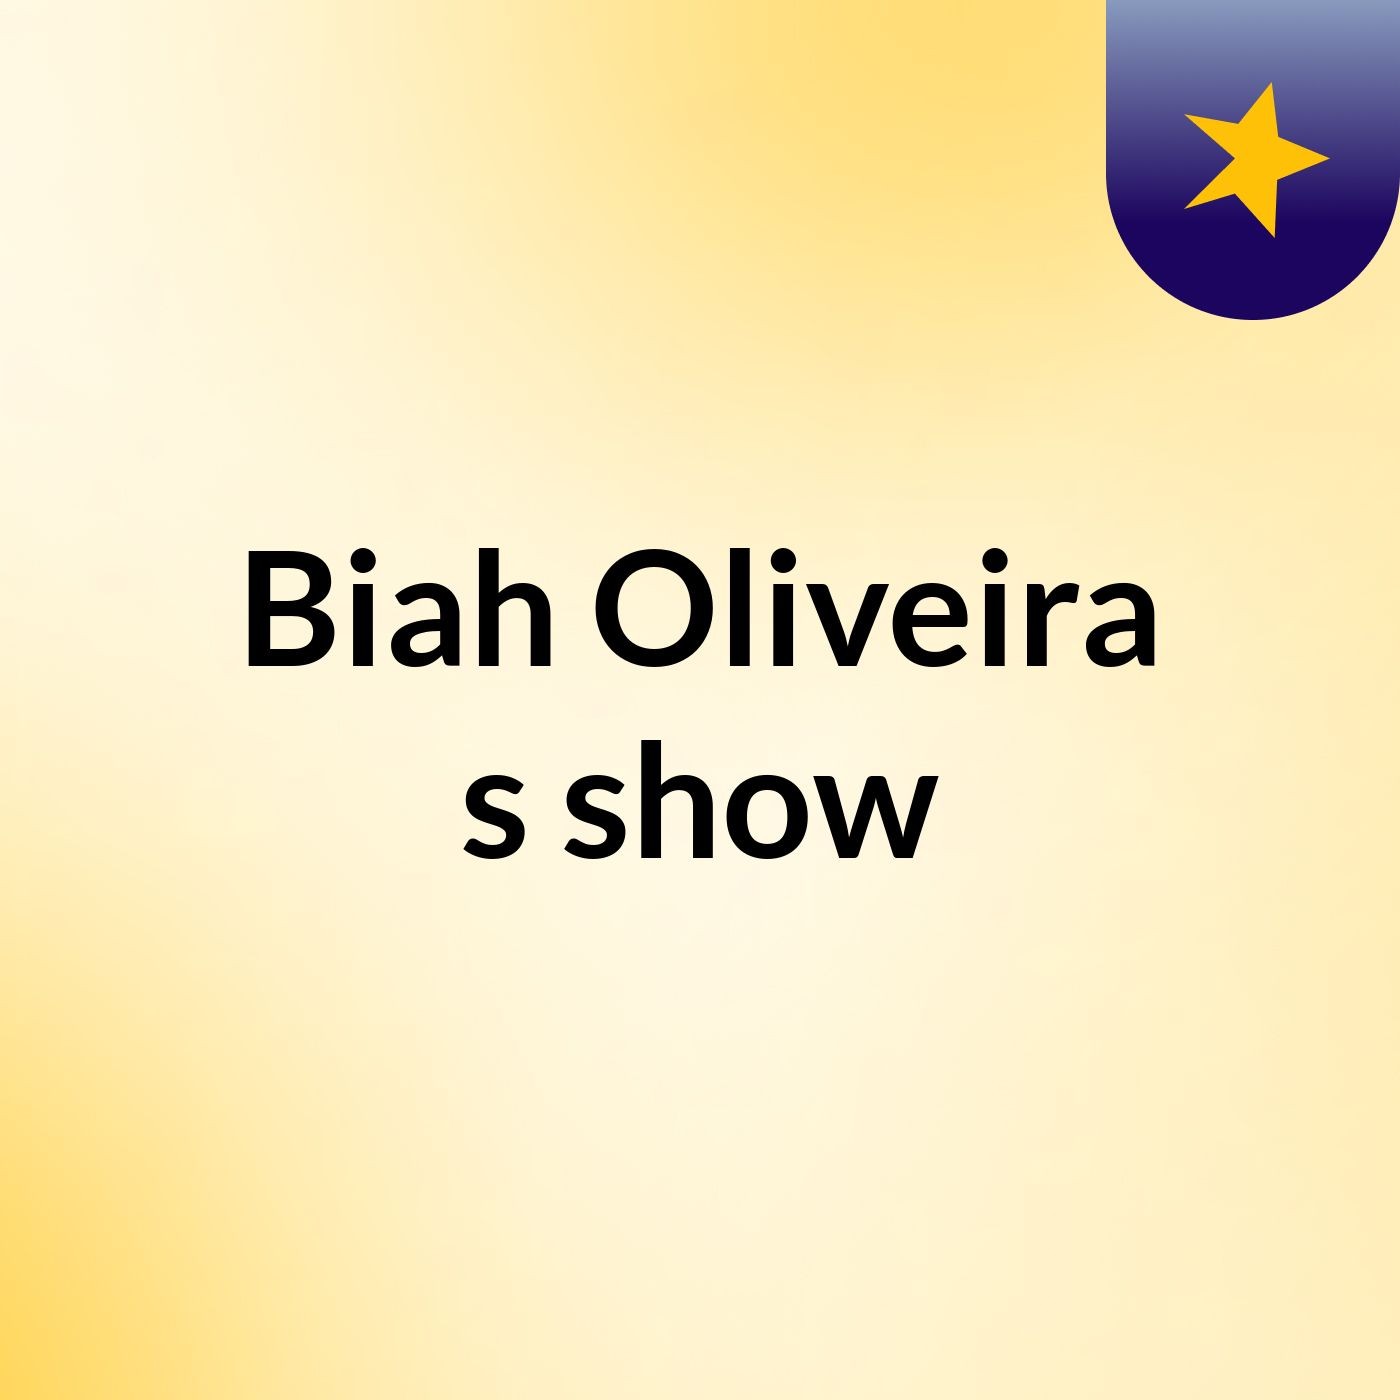 Biah Oliveira's show